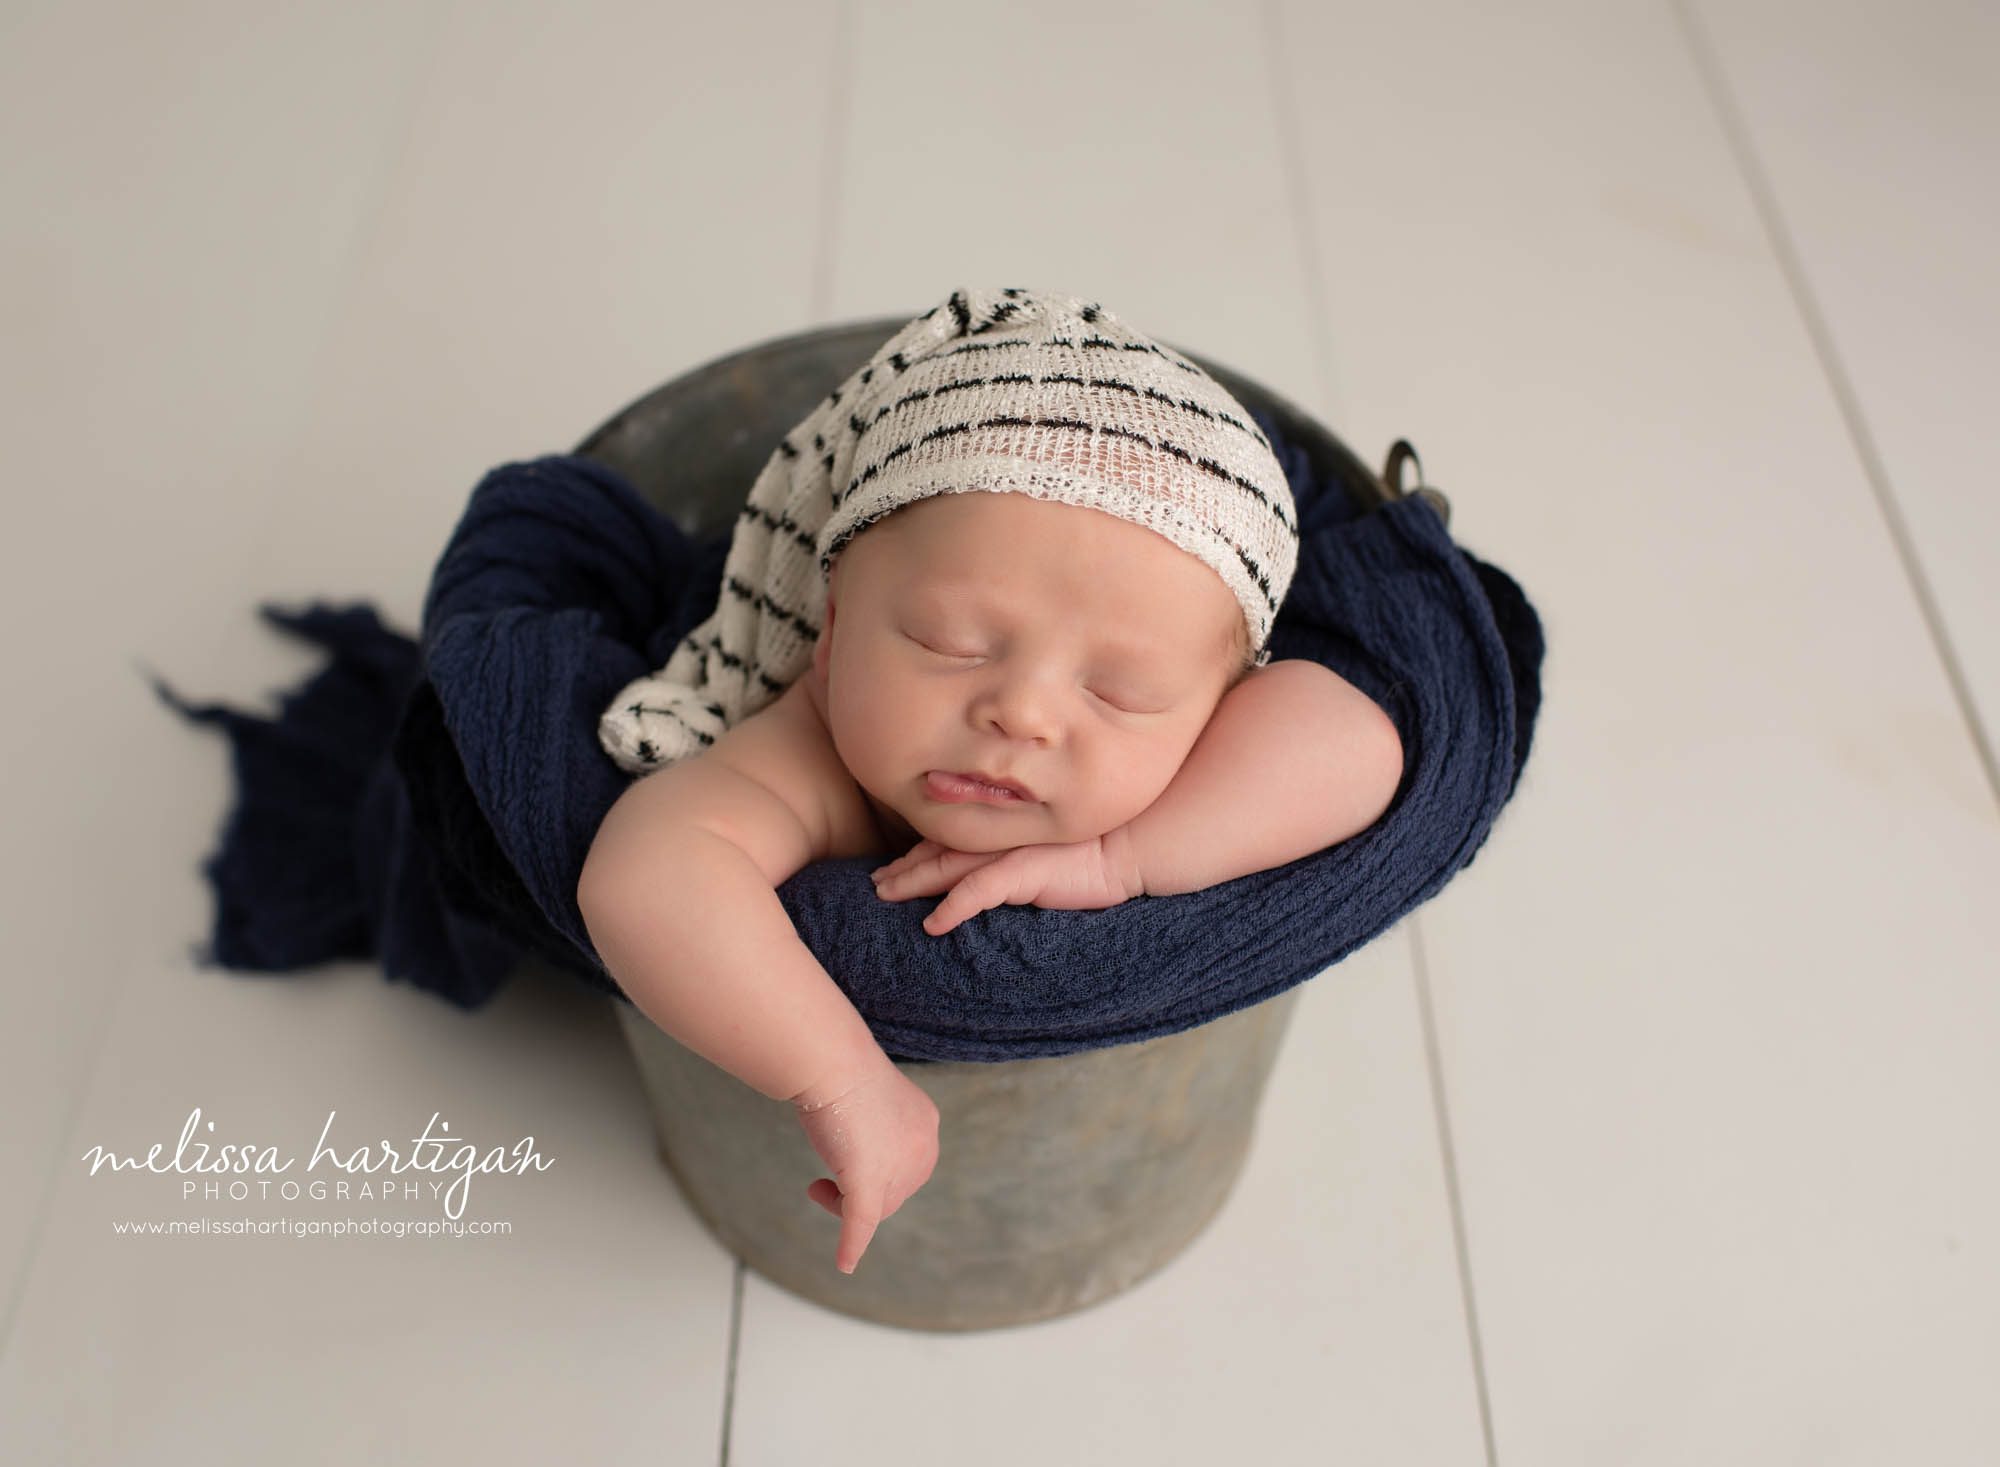 baby boy posed in metal bucket with sleepy cap on